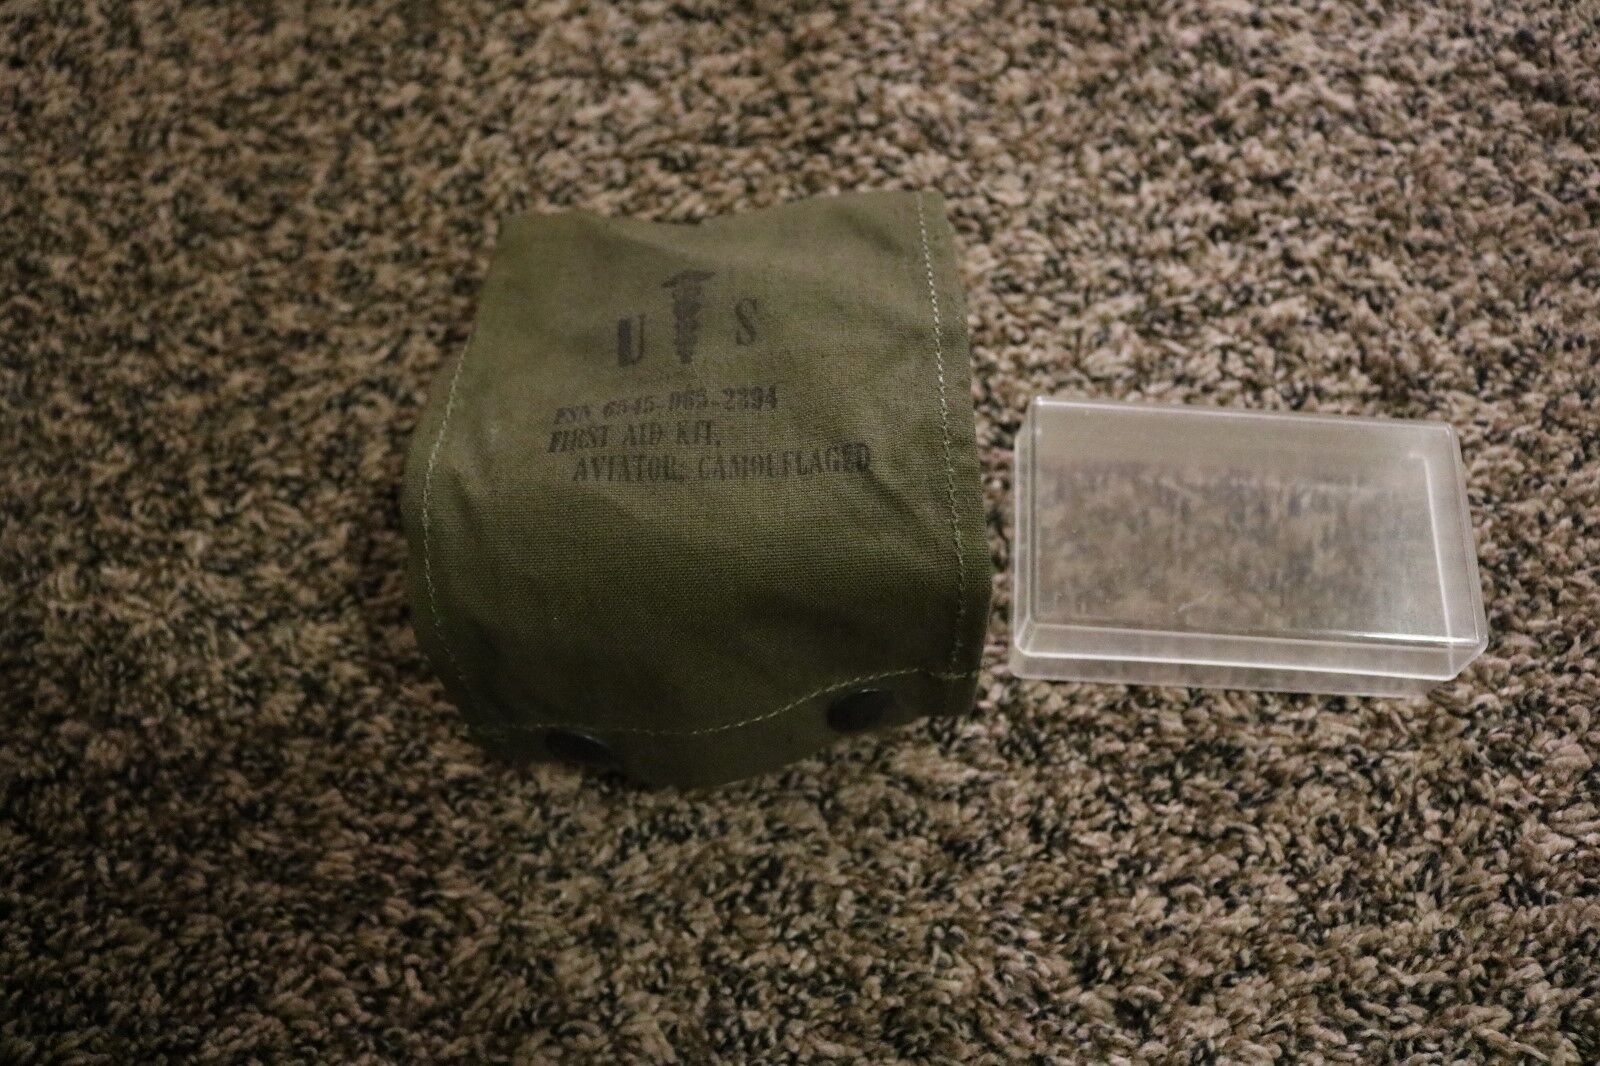 Unissued mint condition Vietnam helicopter pilot vest survival first aid kit